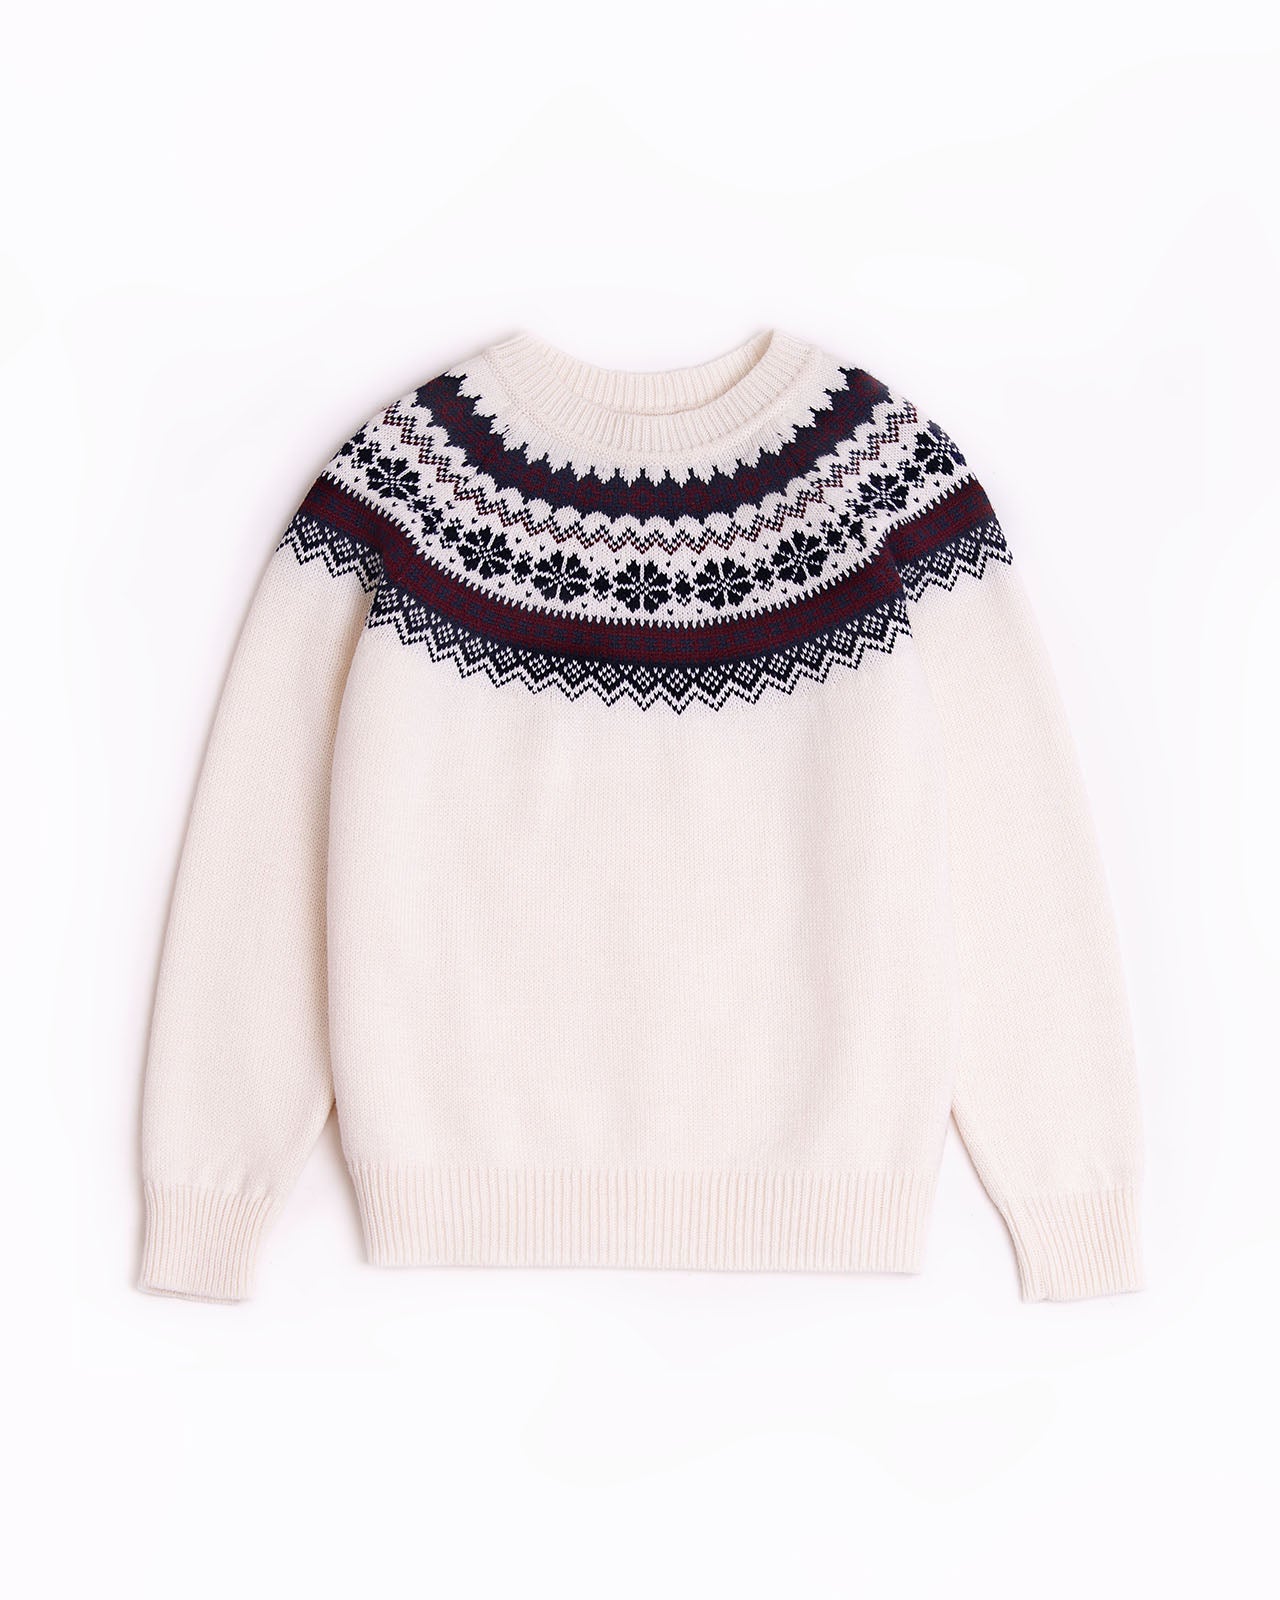 Ruhnu women's yoke sweater | Natural Style Estonia